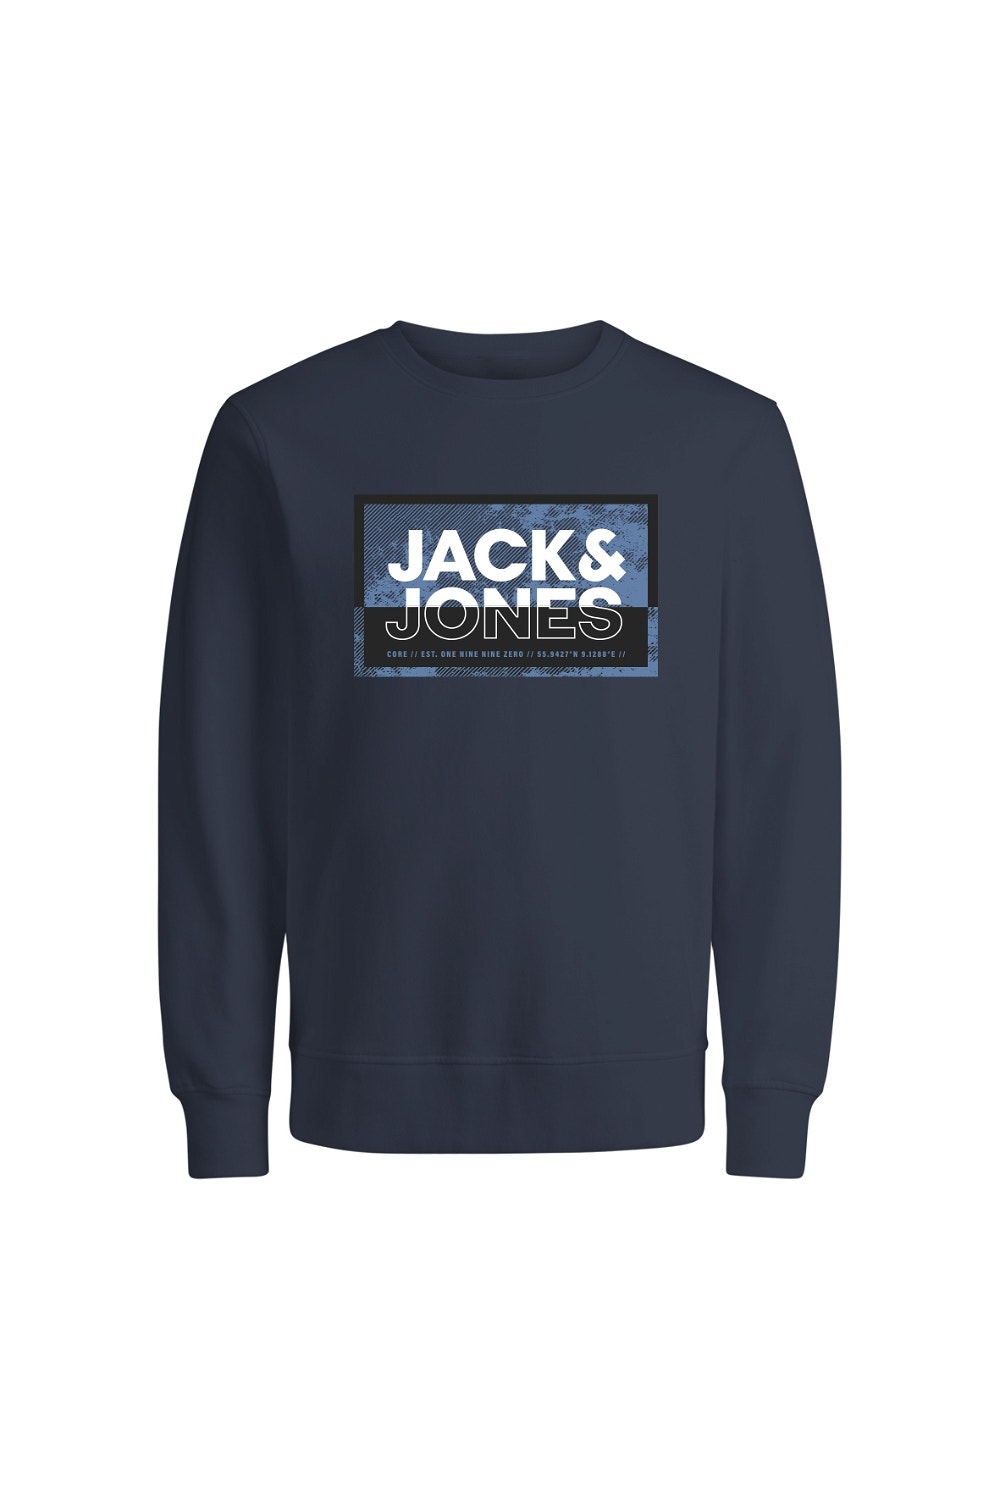 Jack & Jones Printed Crew neck Sweatshirt Mini -Navy Blazer - 12257441